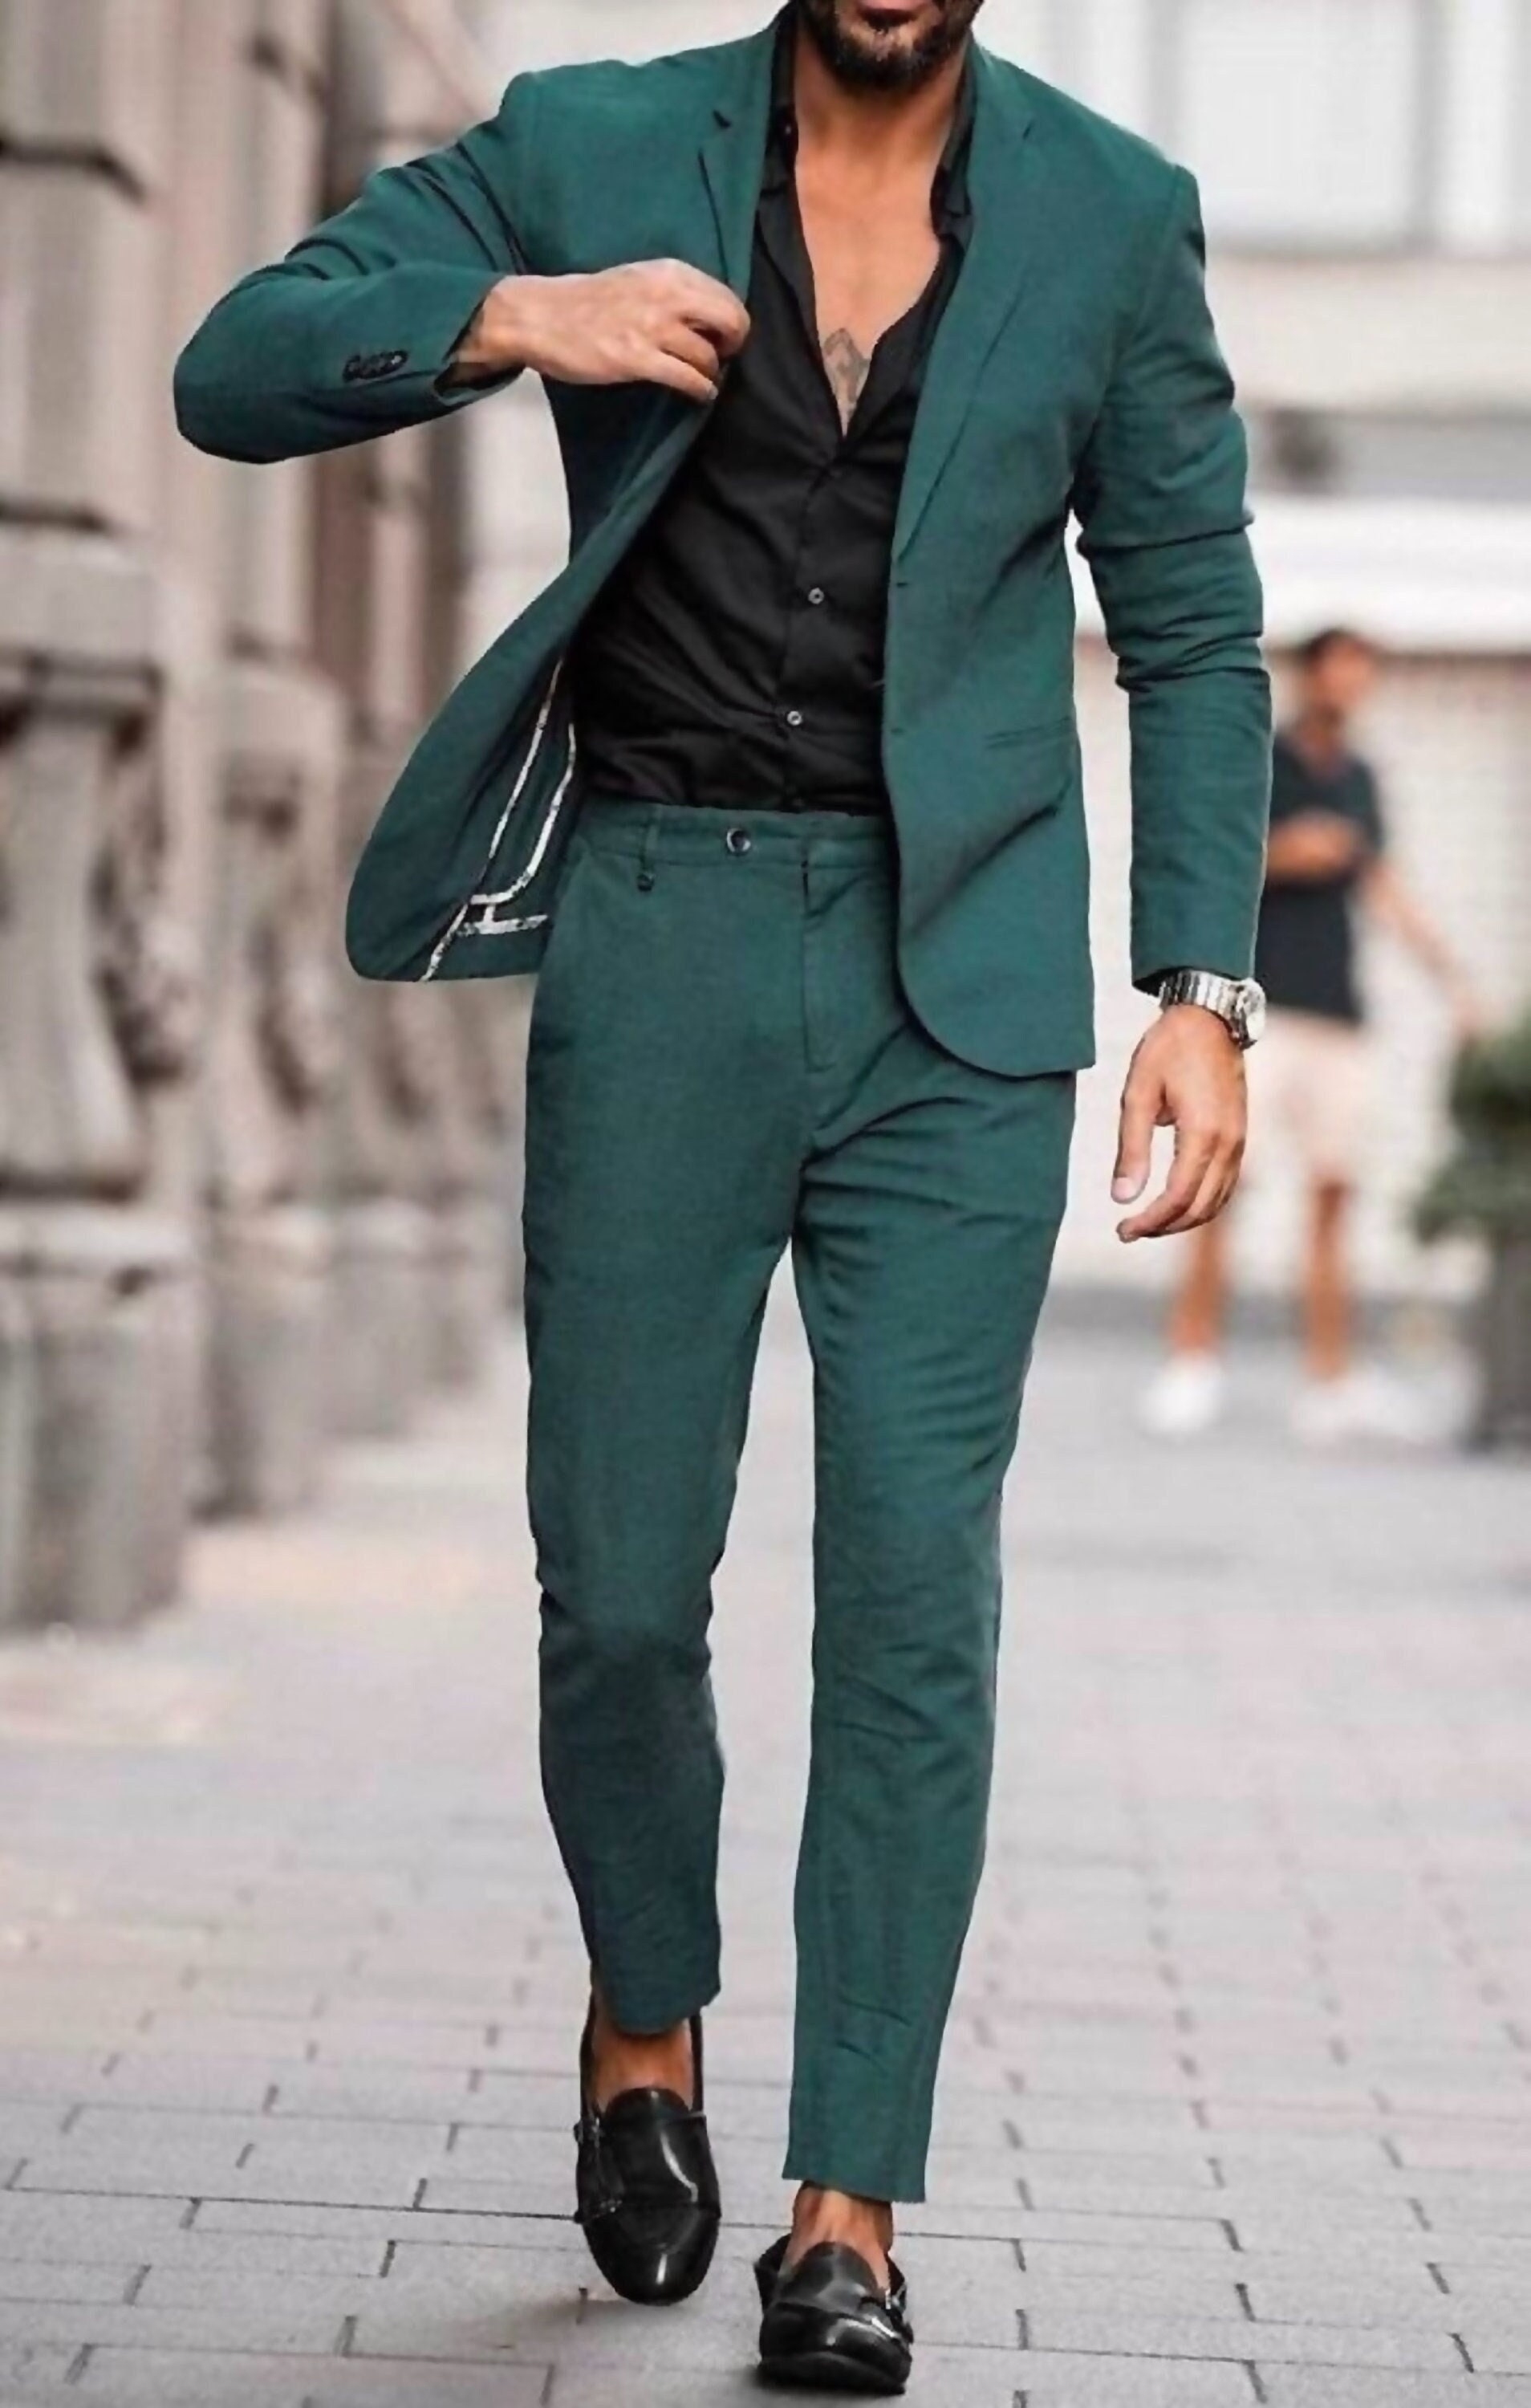 Green Formal Suit Man Suit Elegant Fashion Suit Green Two Piece Wedding  Wear Gift Formal Fashion Suit Men Green Suit. - Etsy